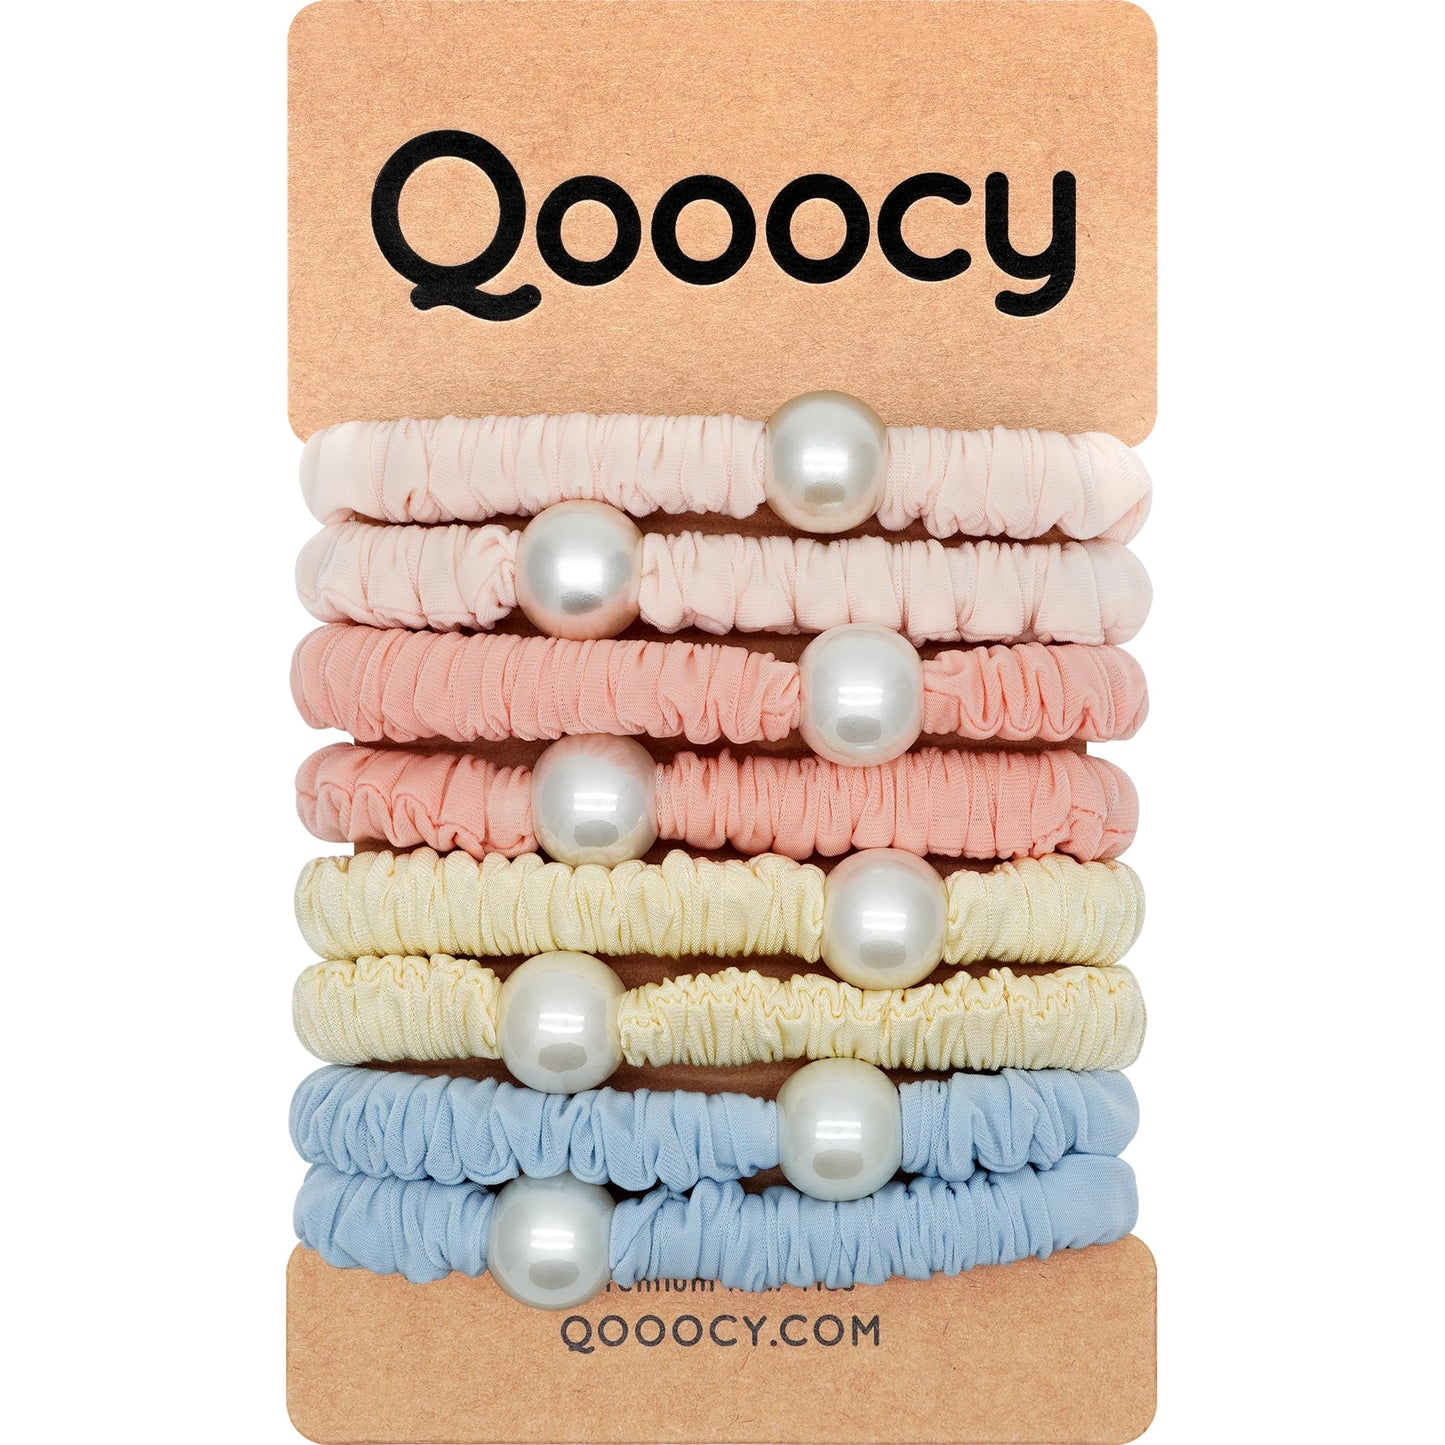 Qooocy Skinny Hair Scrunchies Artificial Pearl Hair Ties Elastics Ponytail Holder No Damage 8 Pack, Pastel